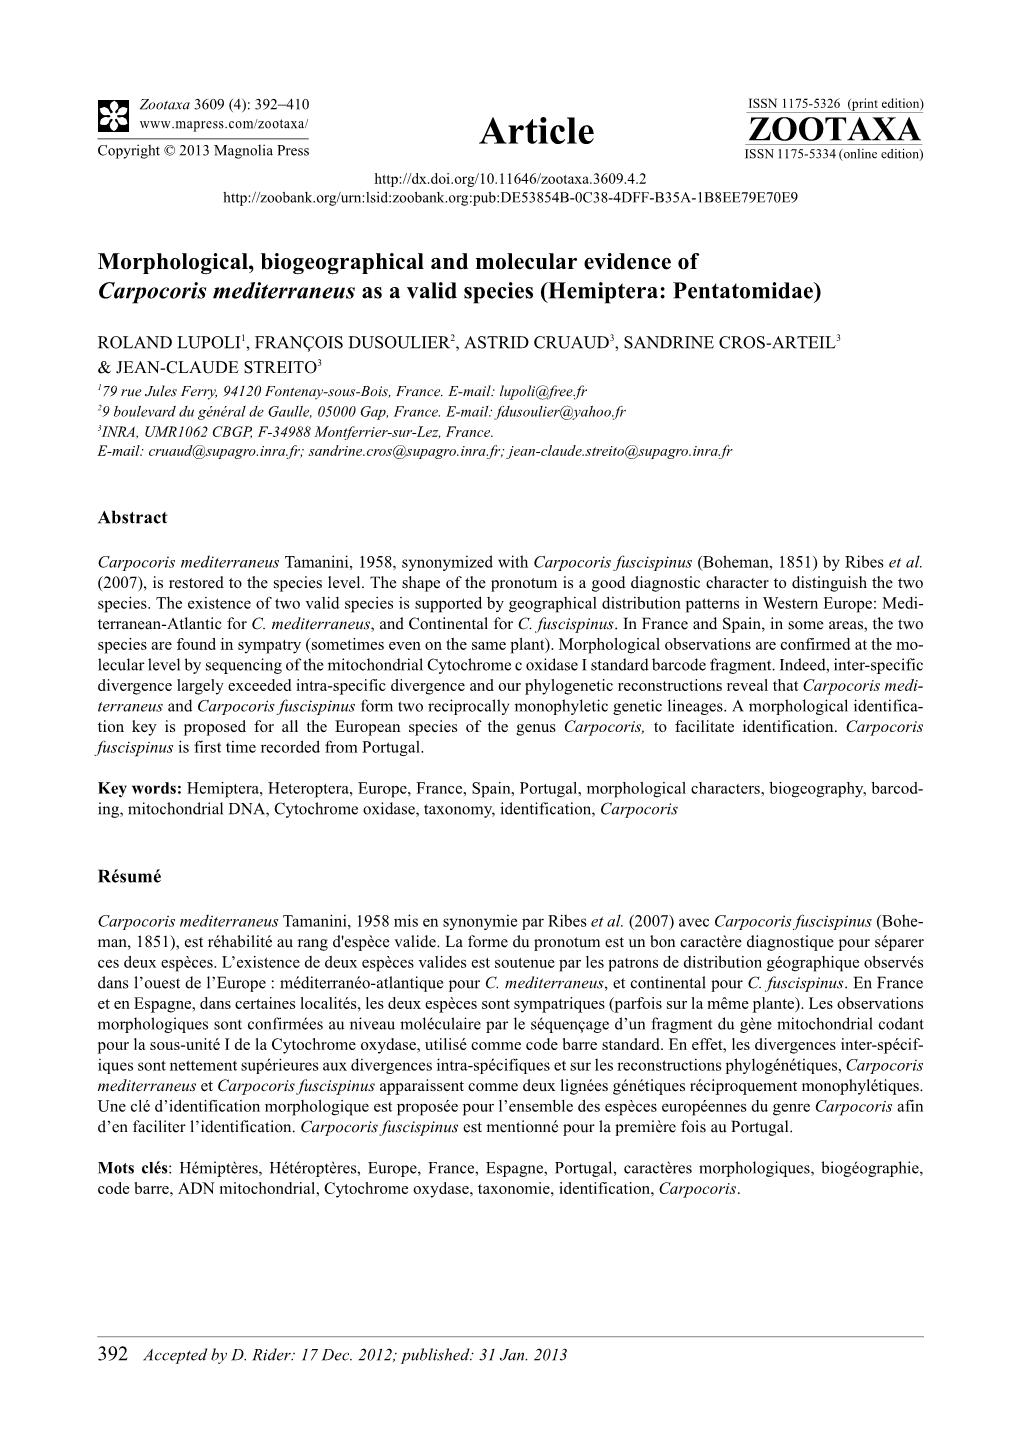 Morphological, Biogeographical and Molecular Evidence of Carpocoris Mediterraneus As a Valid Species (Hemiptera: Pentatomidae)